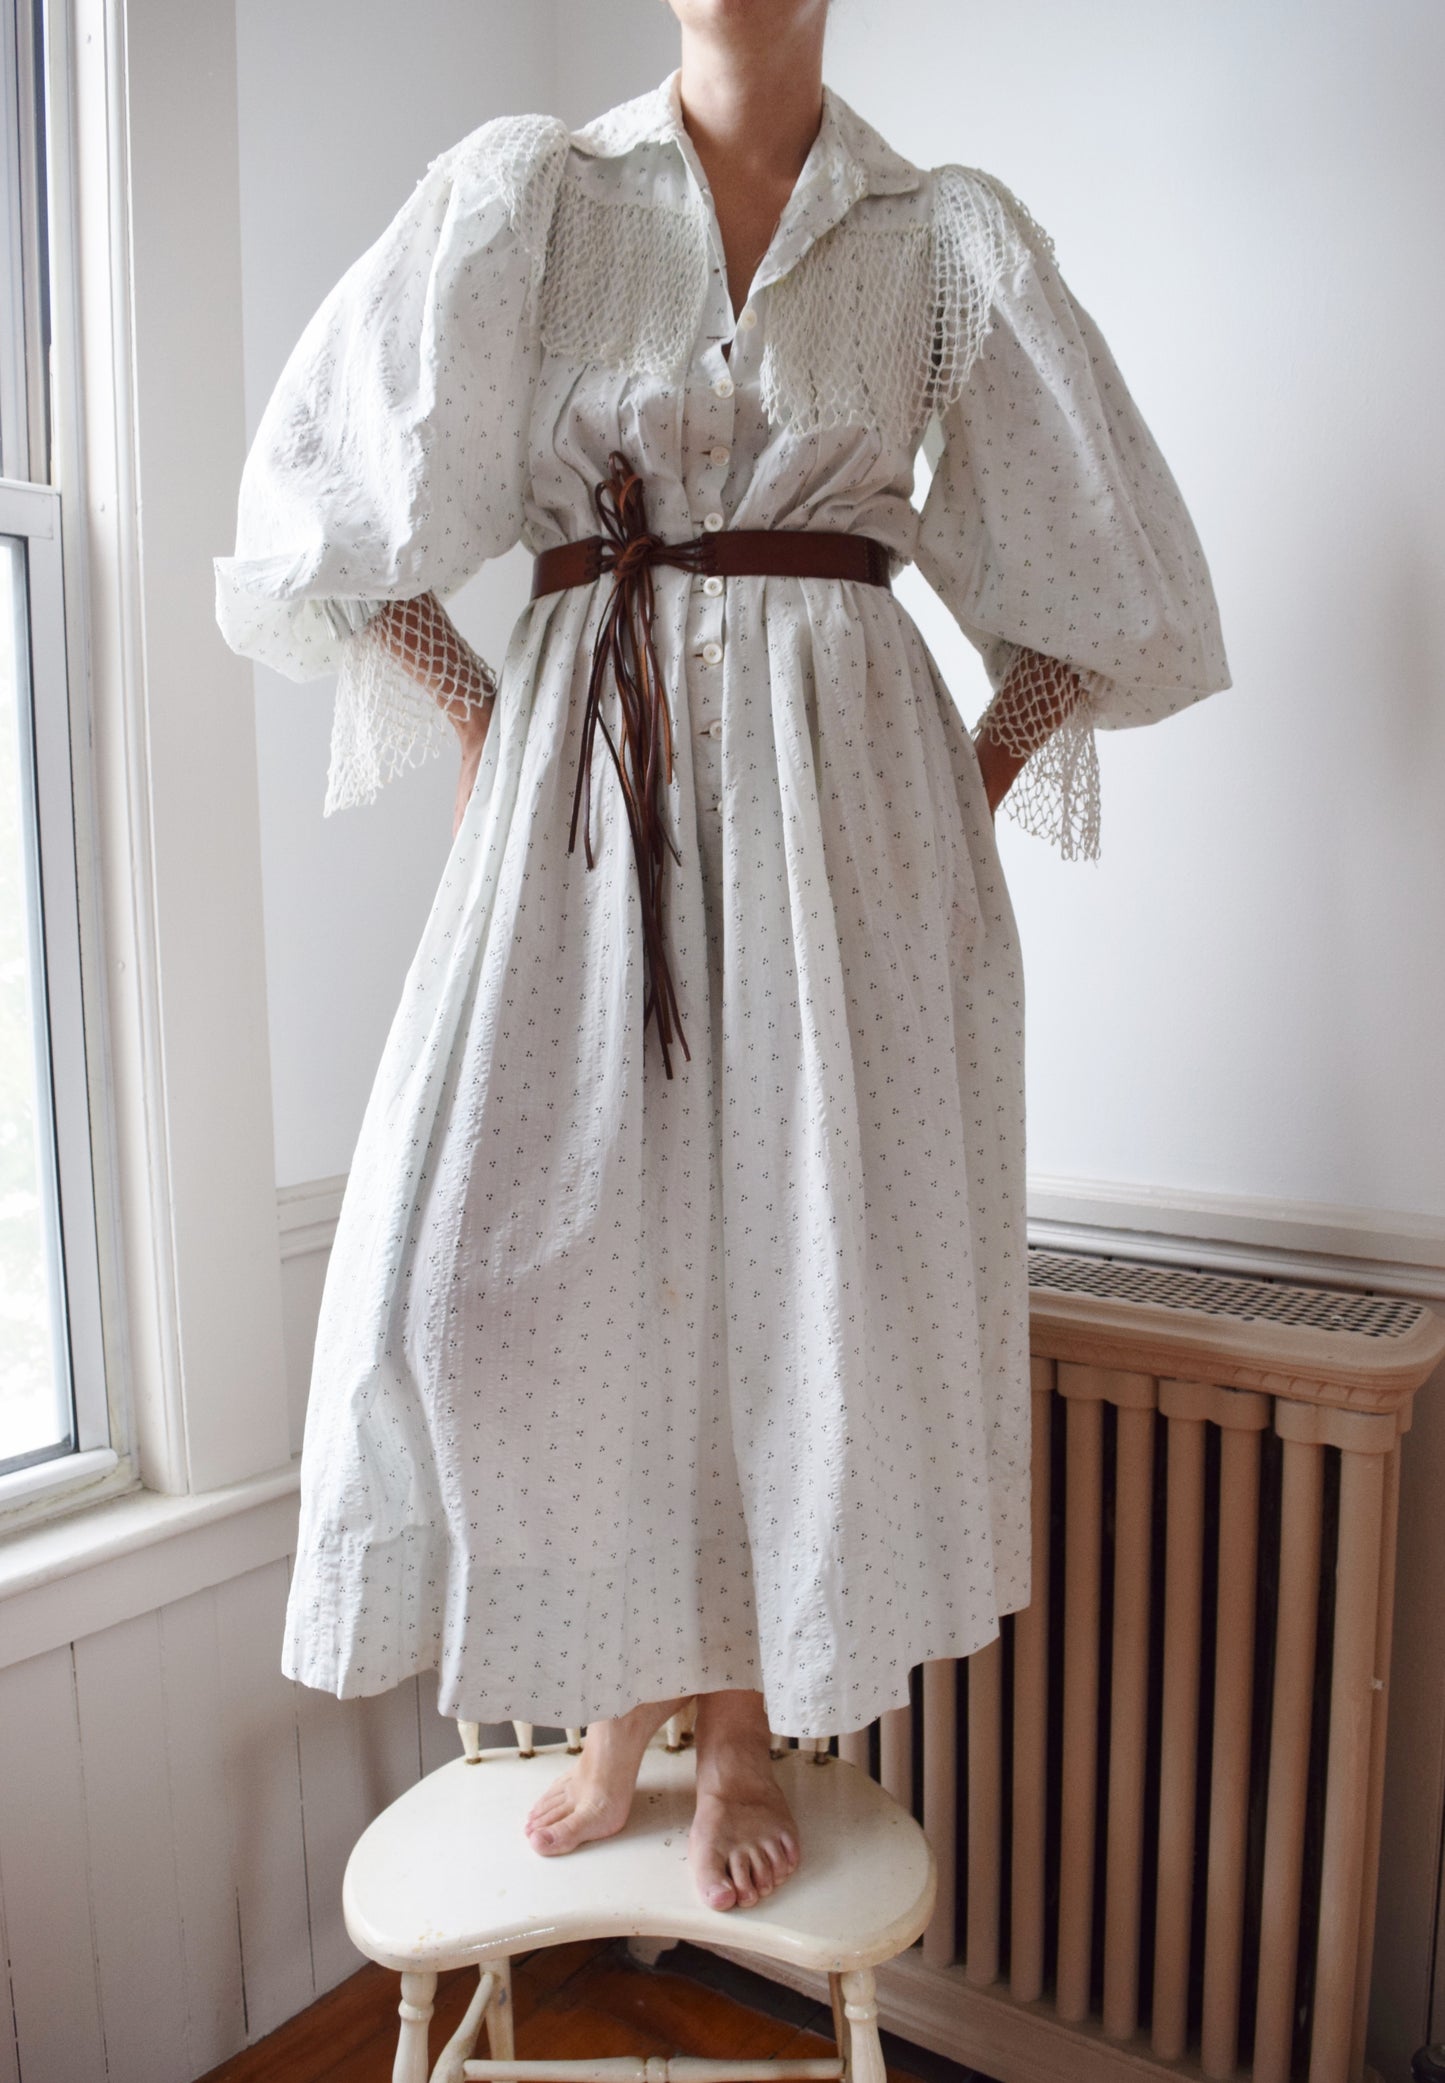 Antique Calico and Net Dress | c. 1890s | M